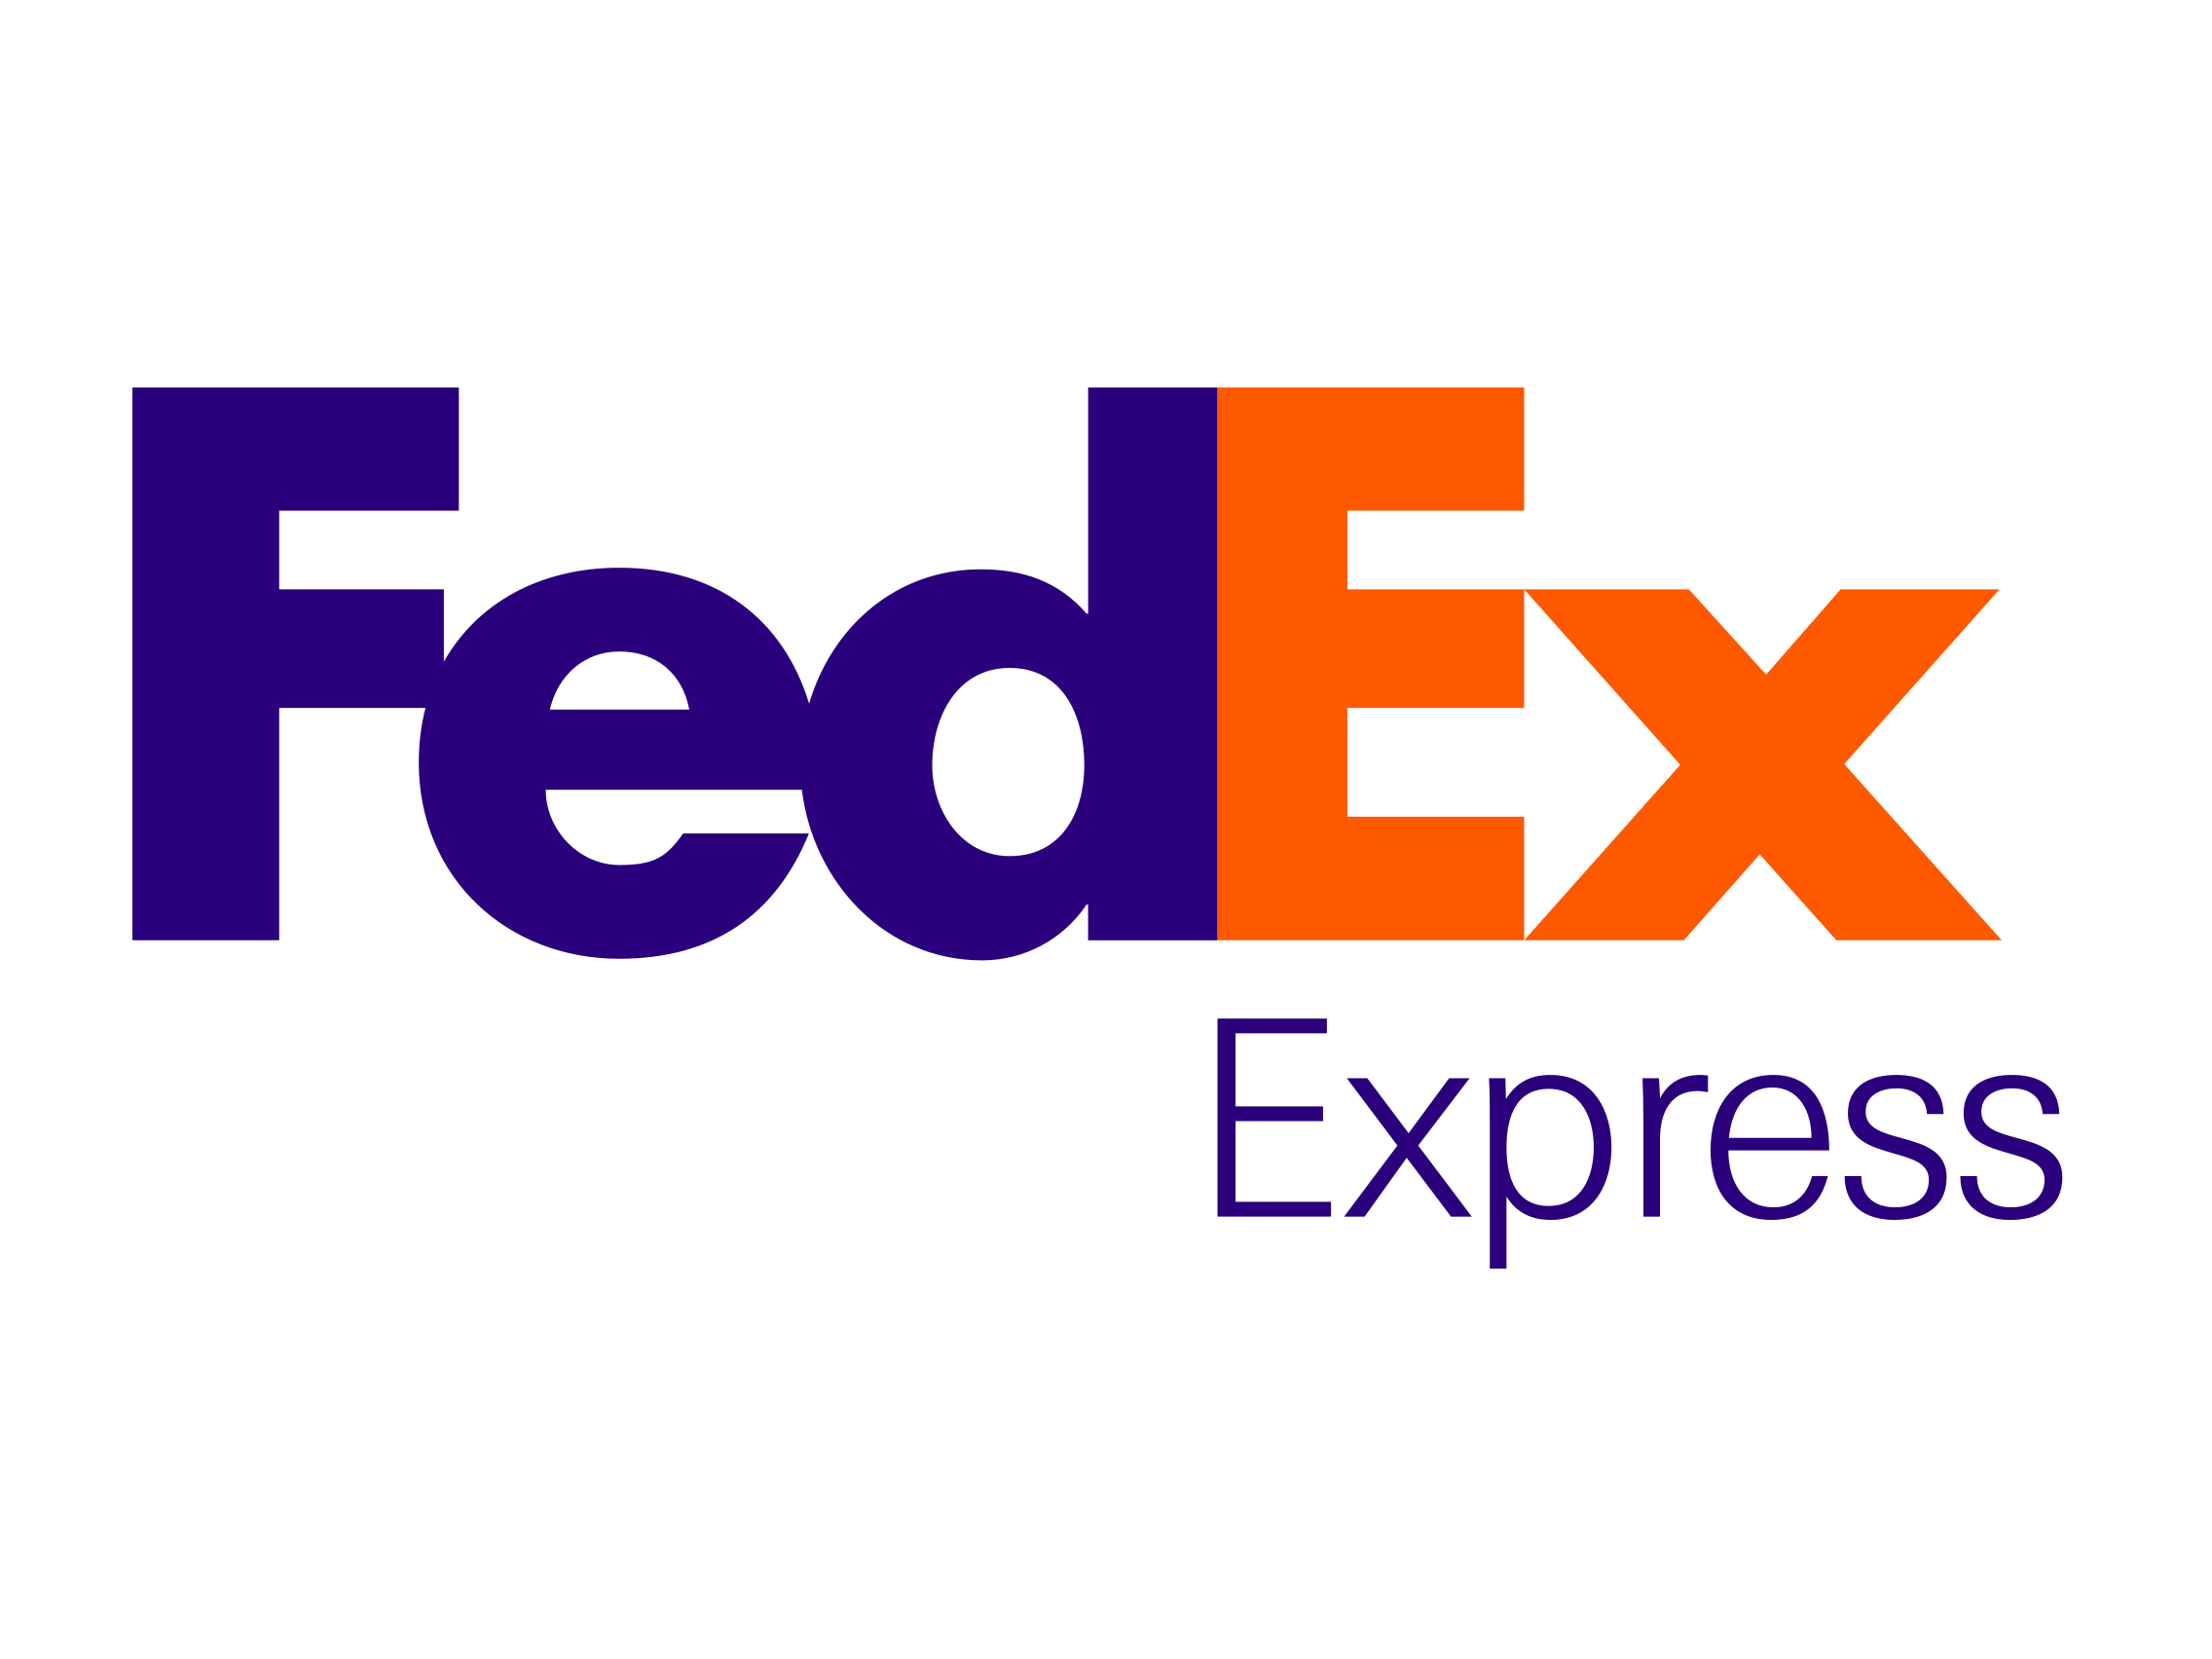 FedEx Express Logo - FedEx Express logo